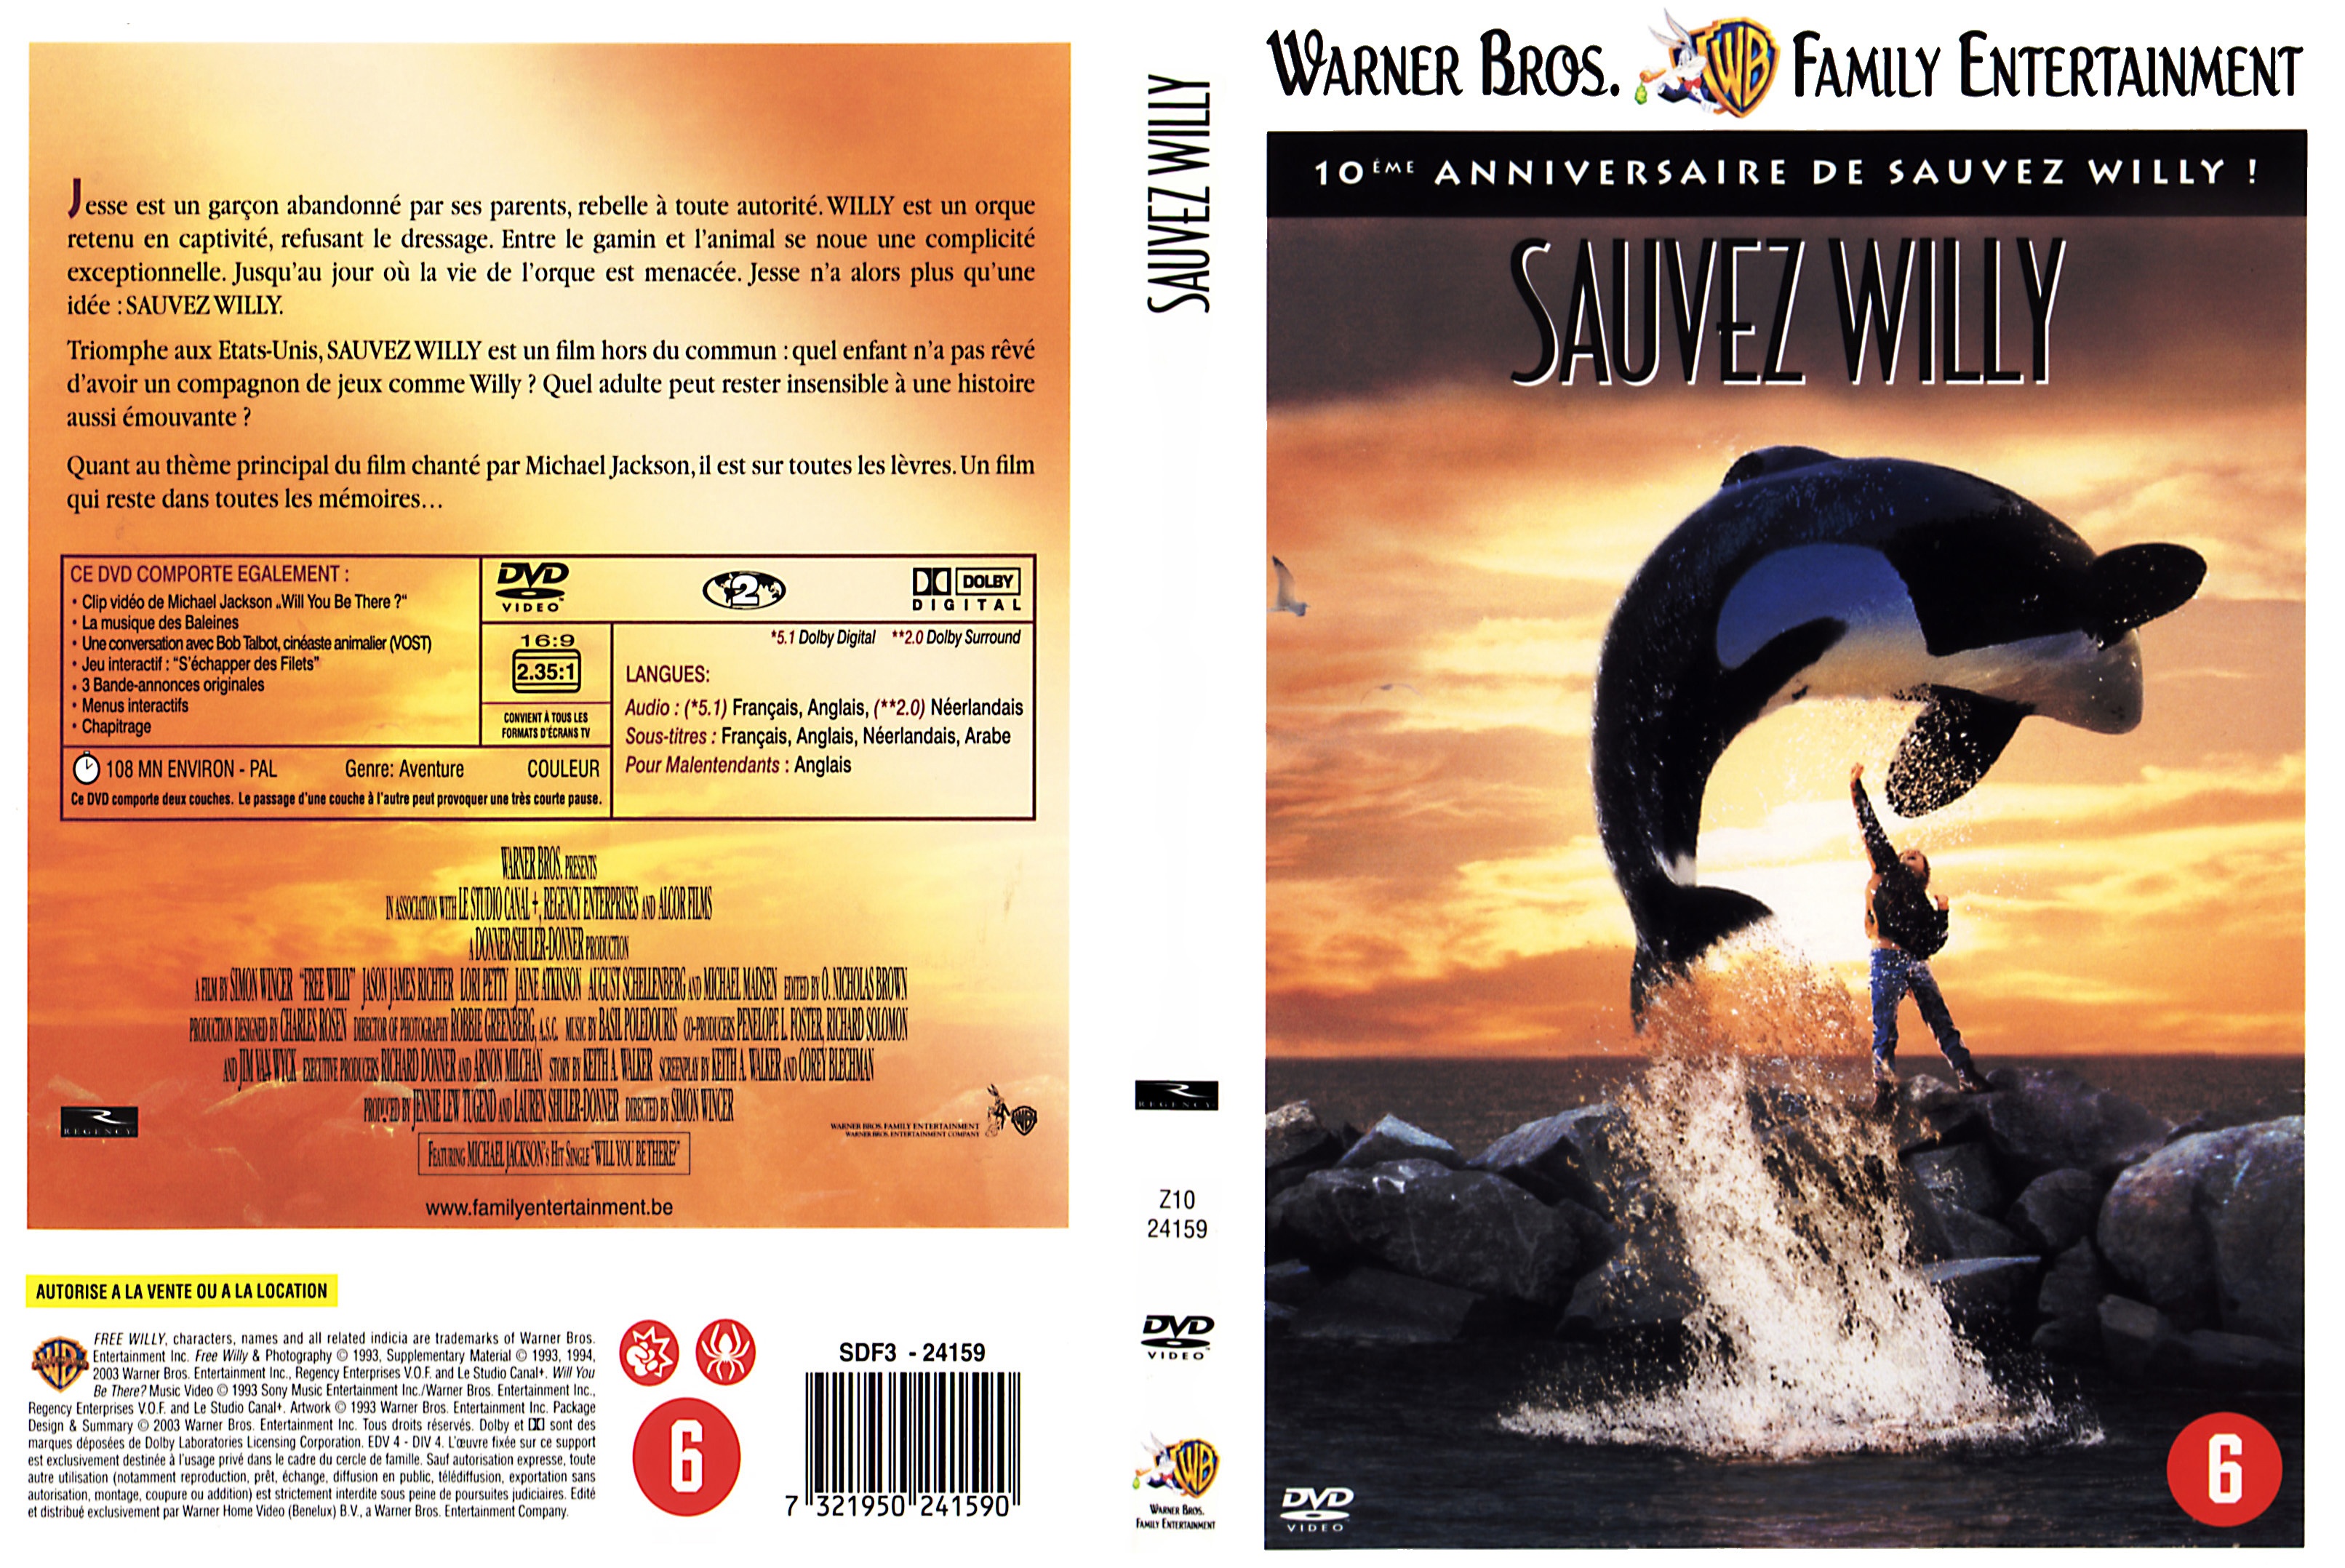 Jaquette DVD Sauvez Willy v2